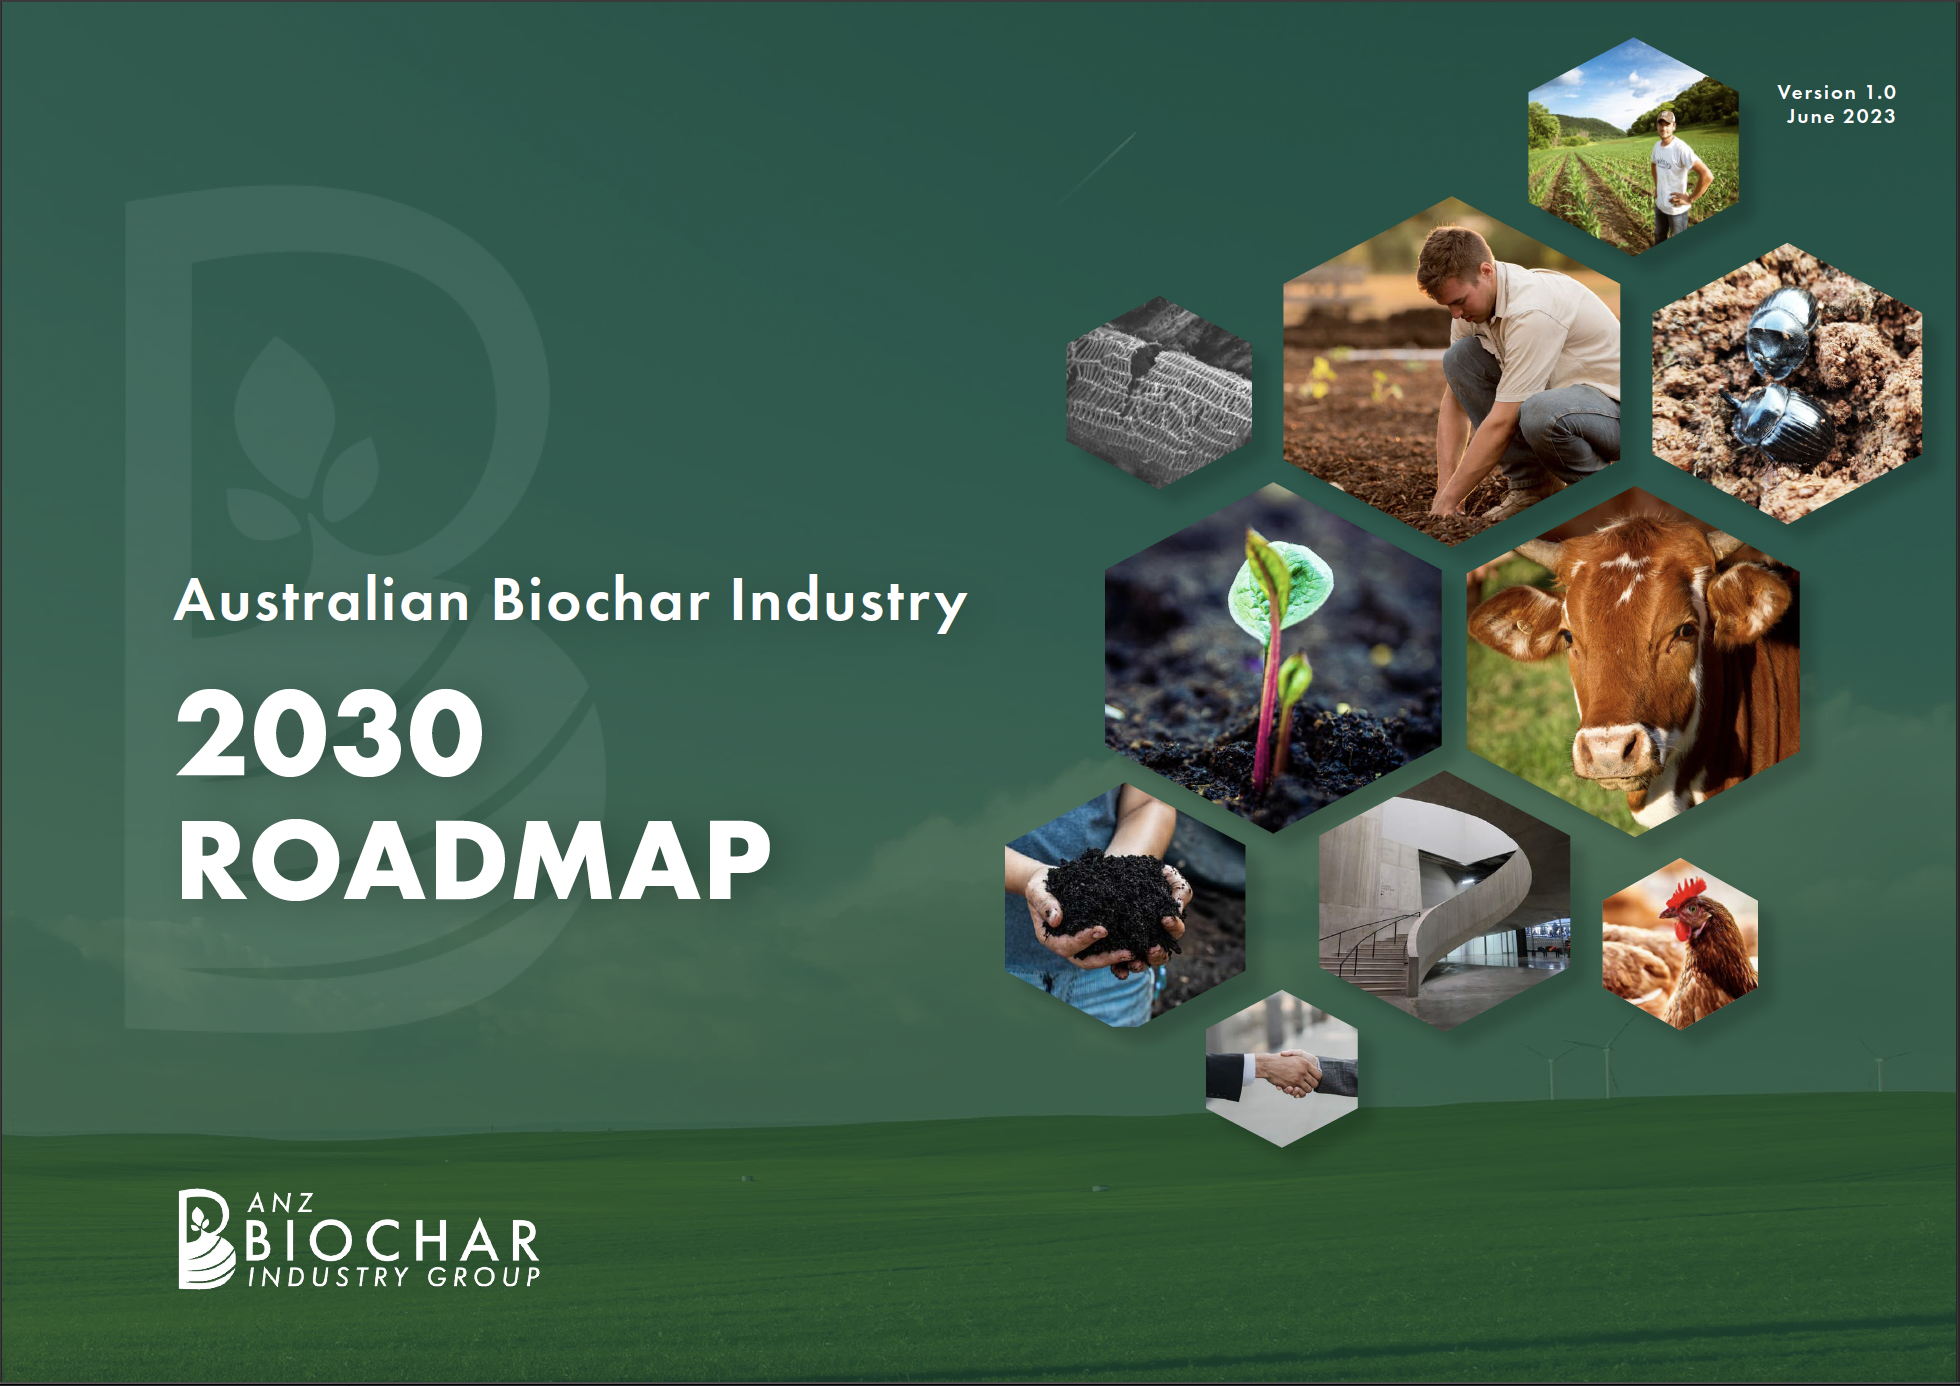 Stewardship Integrated Throughout Biochar Industry Roadmap